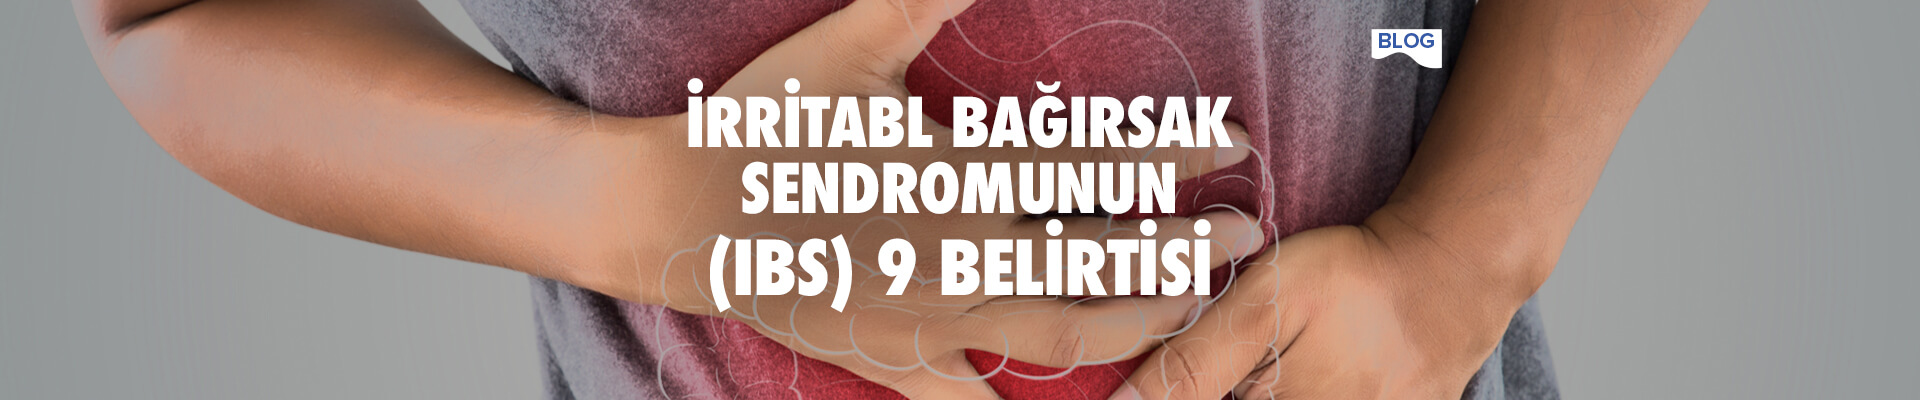 İrritabl Bağırsak Sendromunun (IBS) 9 Belirtisi